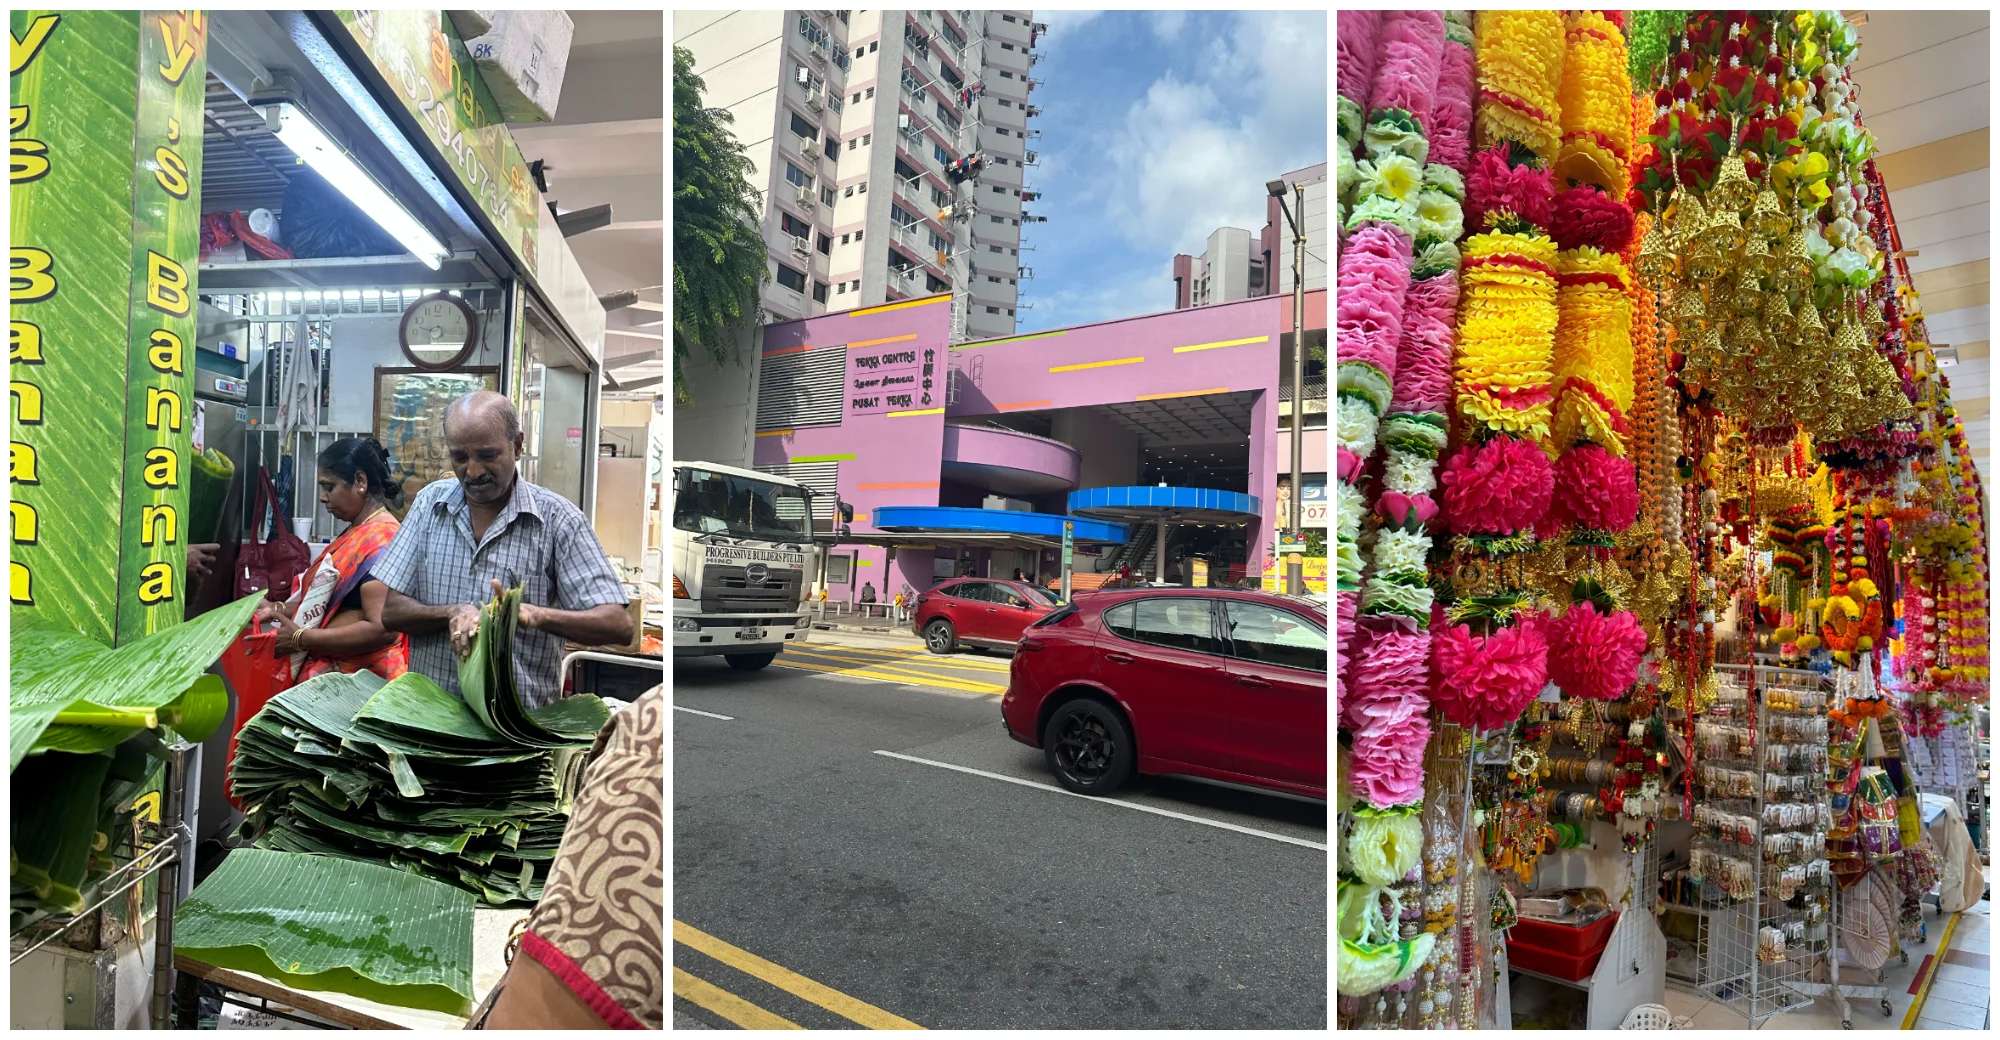 3 pictures showing Tekka Market in Singapore